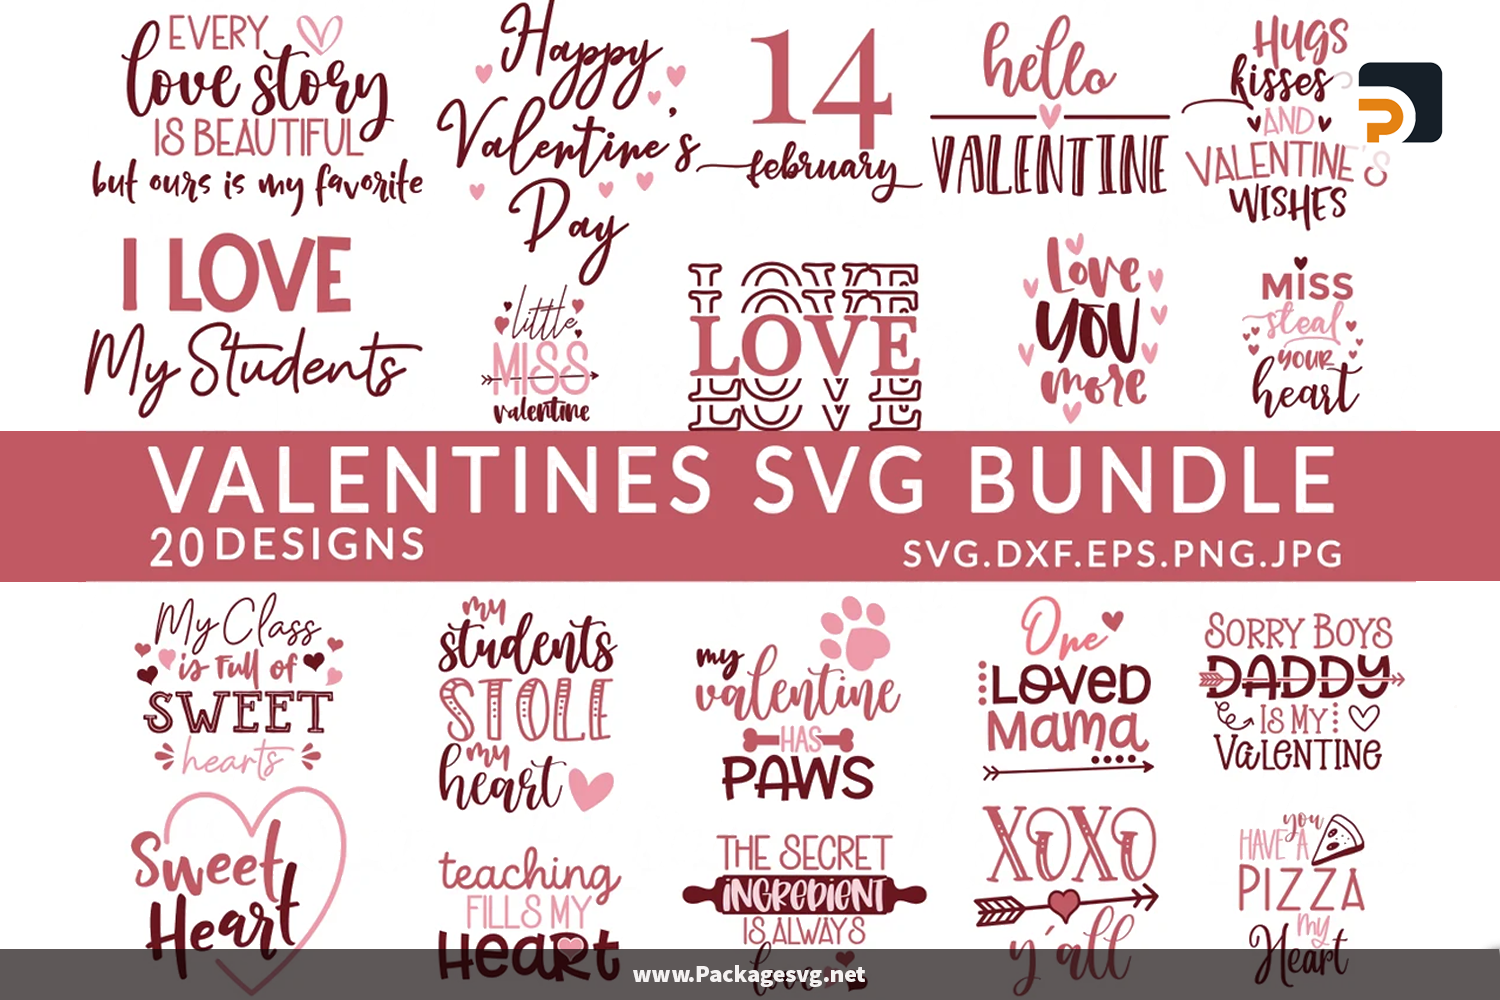 Valentine's Day SVG Bundle